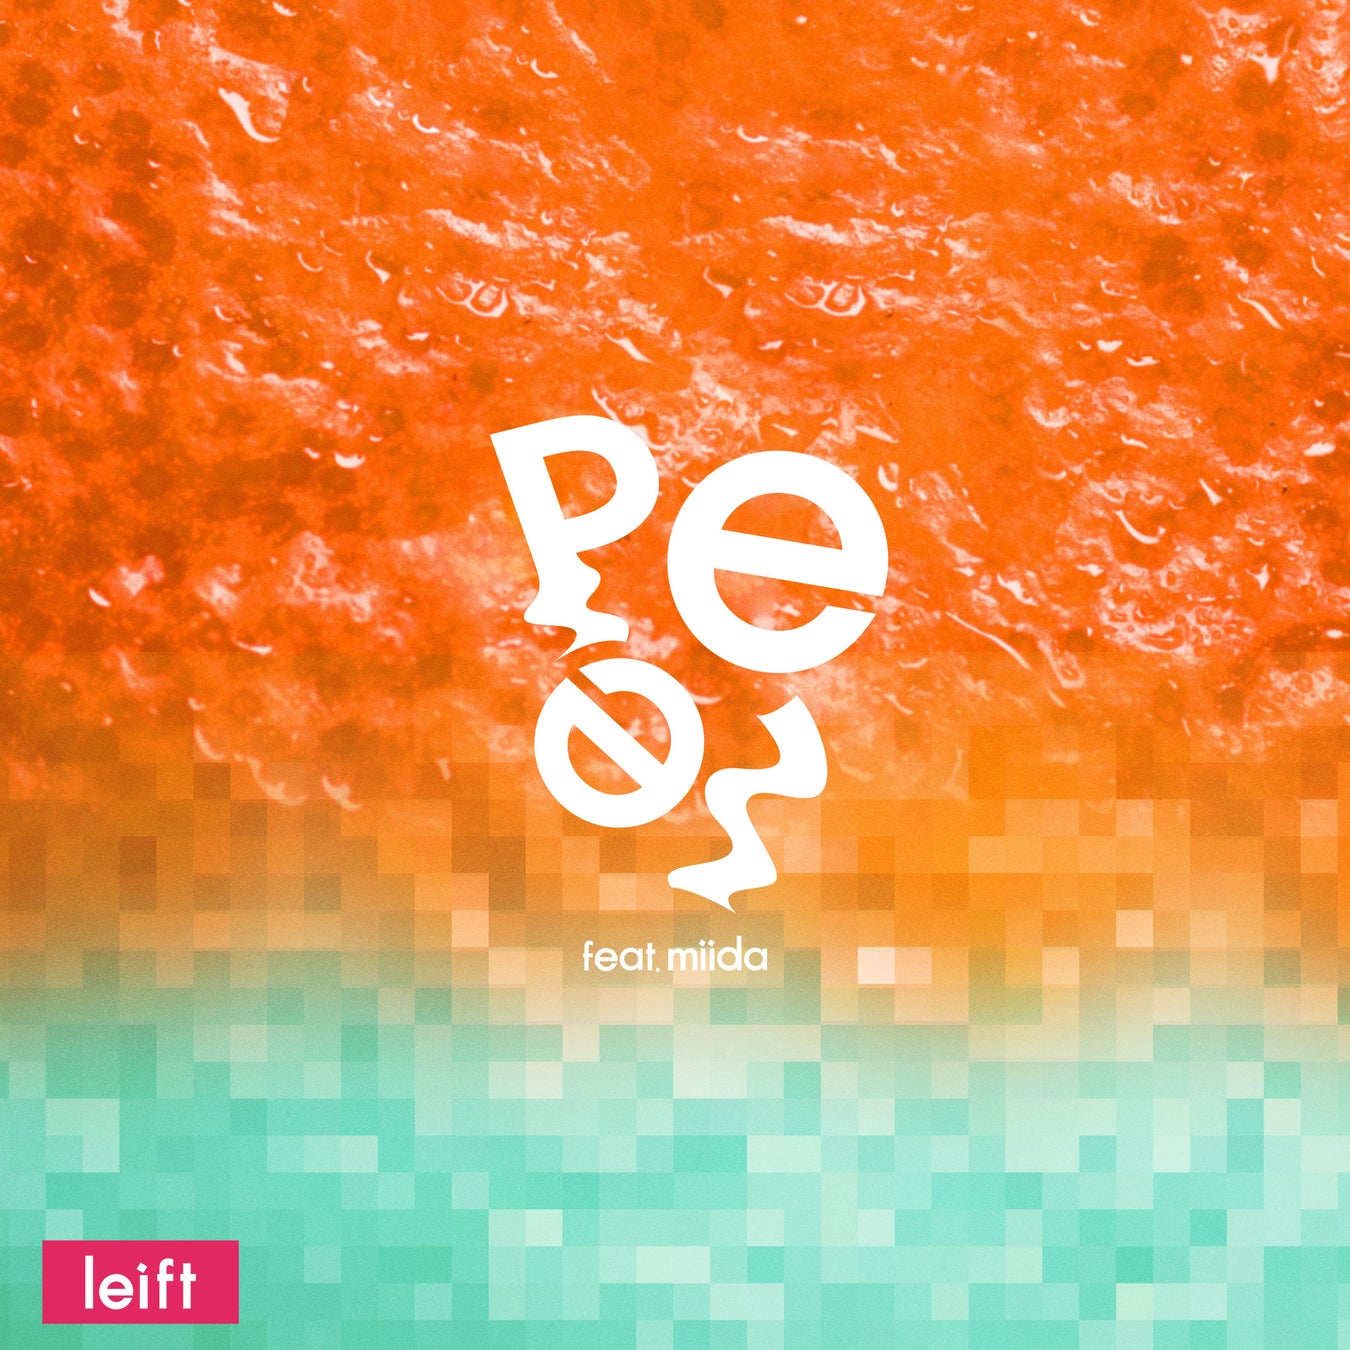 leiftが初のコラボレーション楽曲『Peel』をリリース。第一弾はmiidaを迎えた晩夏のチル・シティポップ。マリオット系列のホテルライブで初披露し、ハイレゾ音源でのNFTバージョンもリリース。のサブ画像4